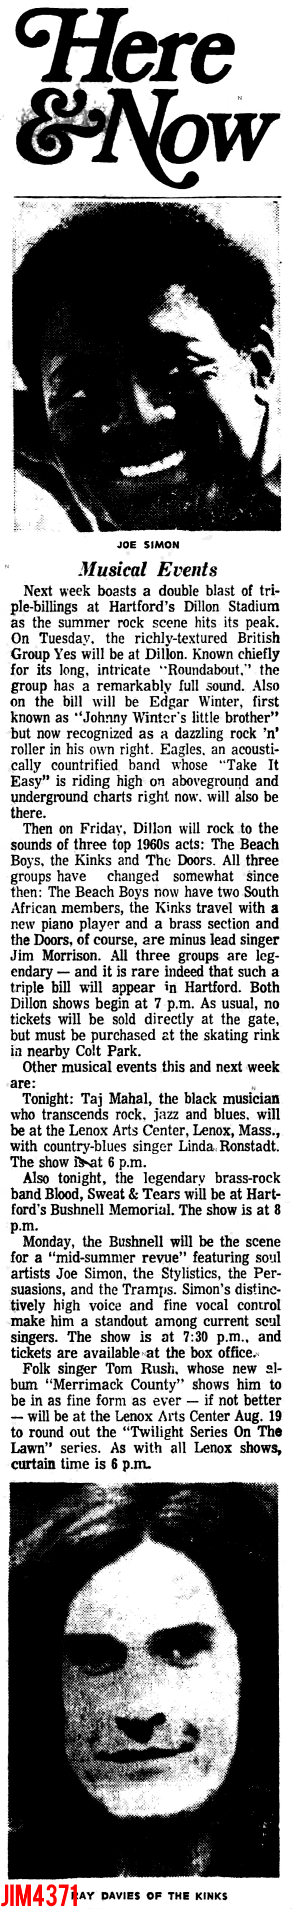 The Doors - Hartford 1972 - Article